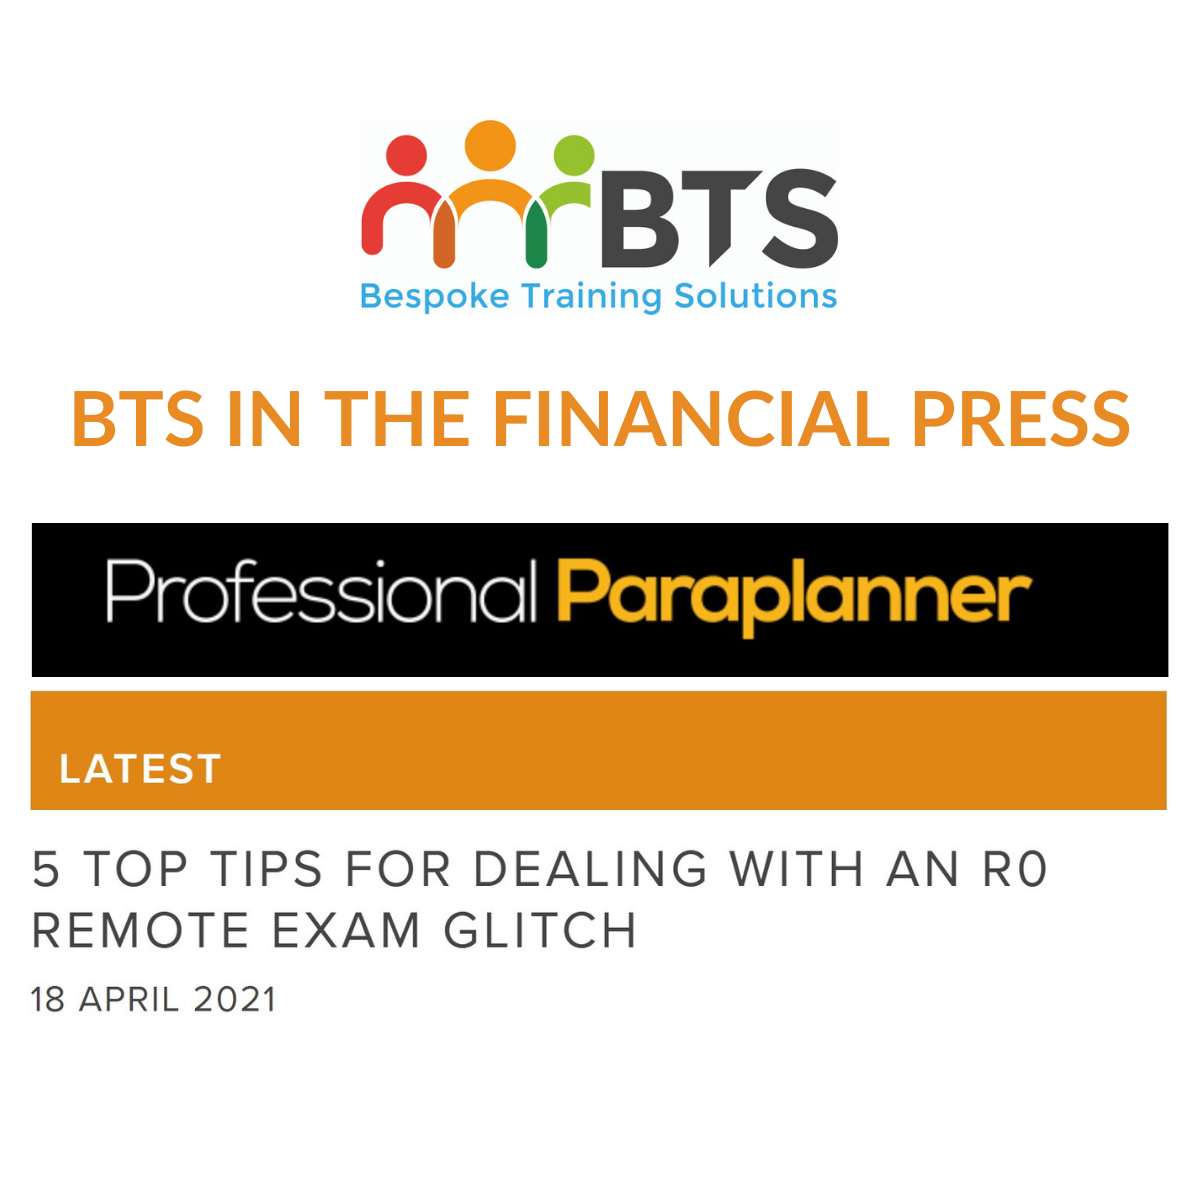 Professional Paraplanner article R0 exam glitch